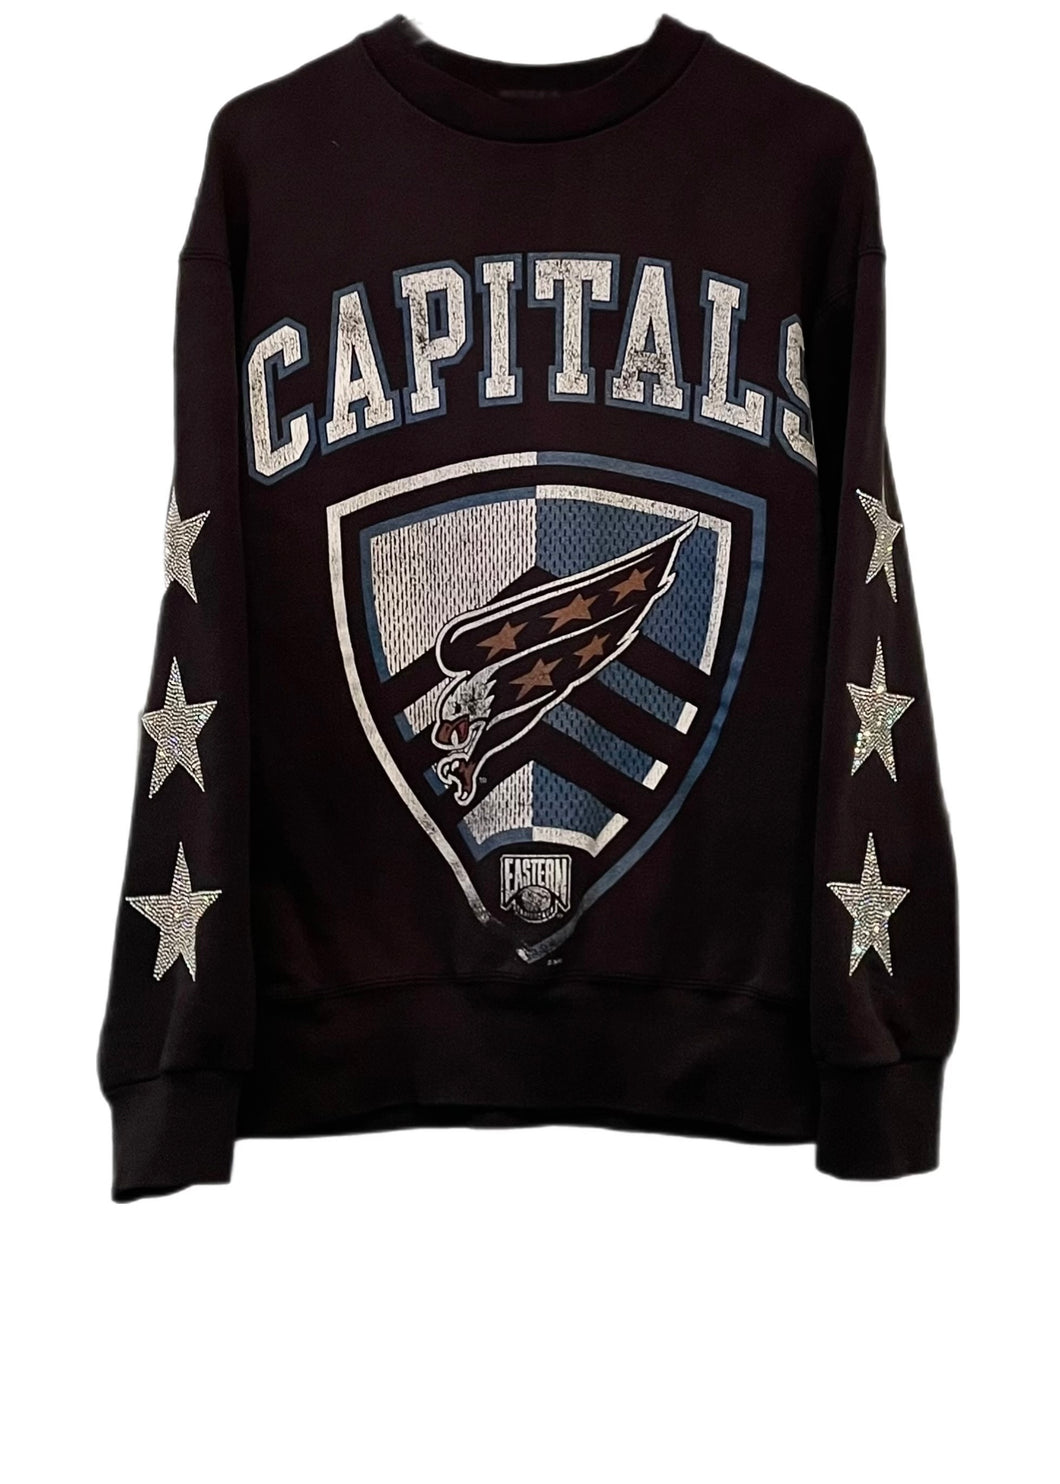 Washington Capitals, NHL One of a KIND Vintage Sweatshirt with Three Crystal Stars Design